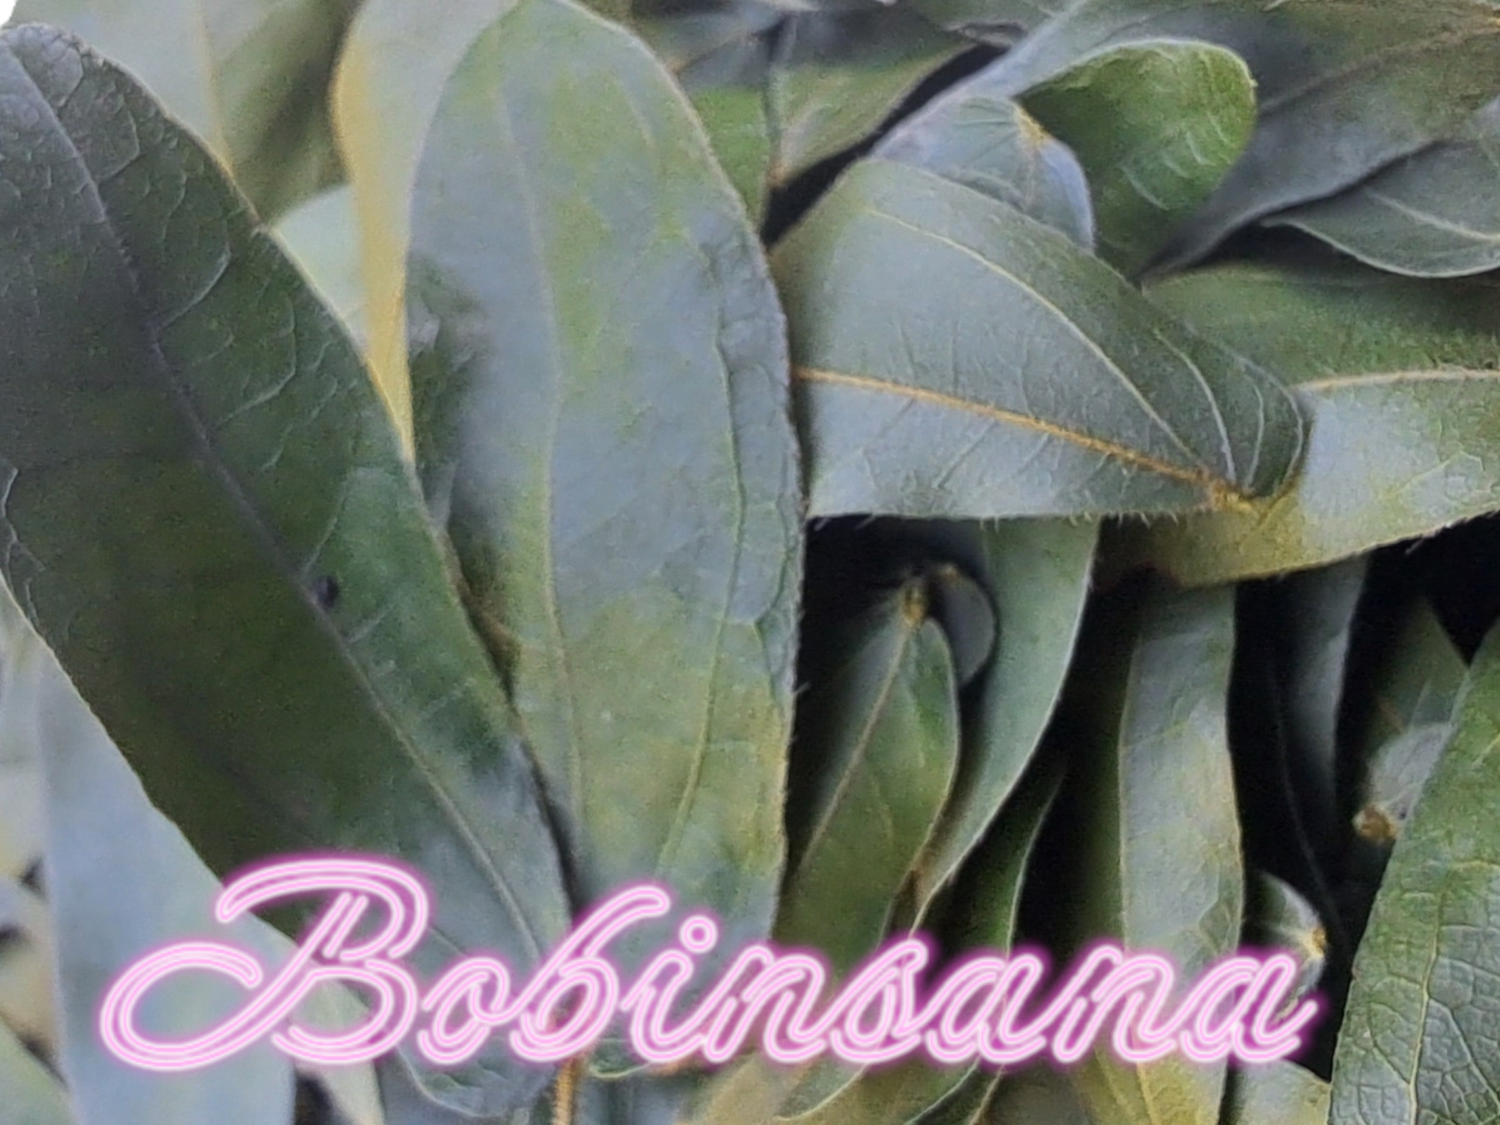 Bobinsana leaf dried 250 gram